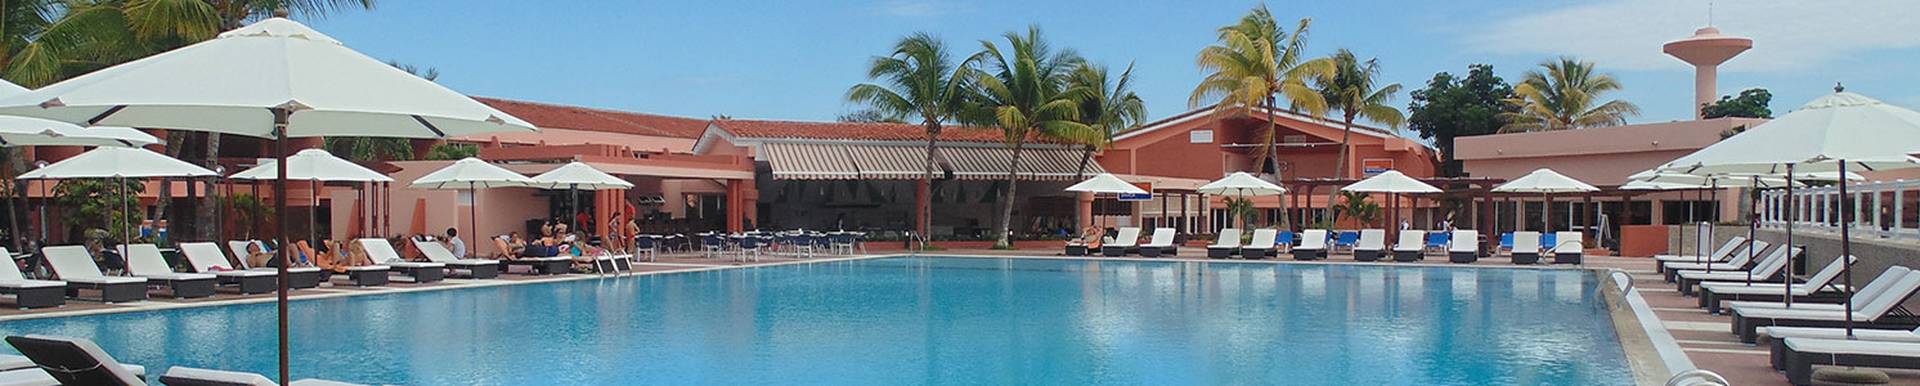 Blau hotels - Cuba - 